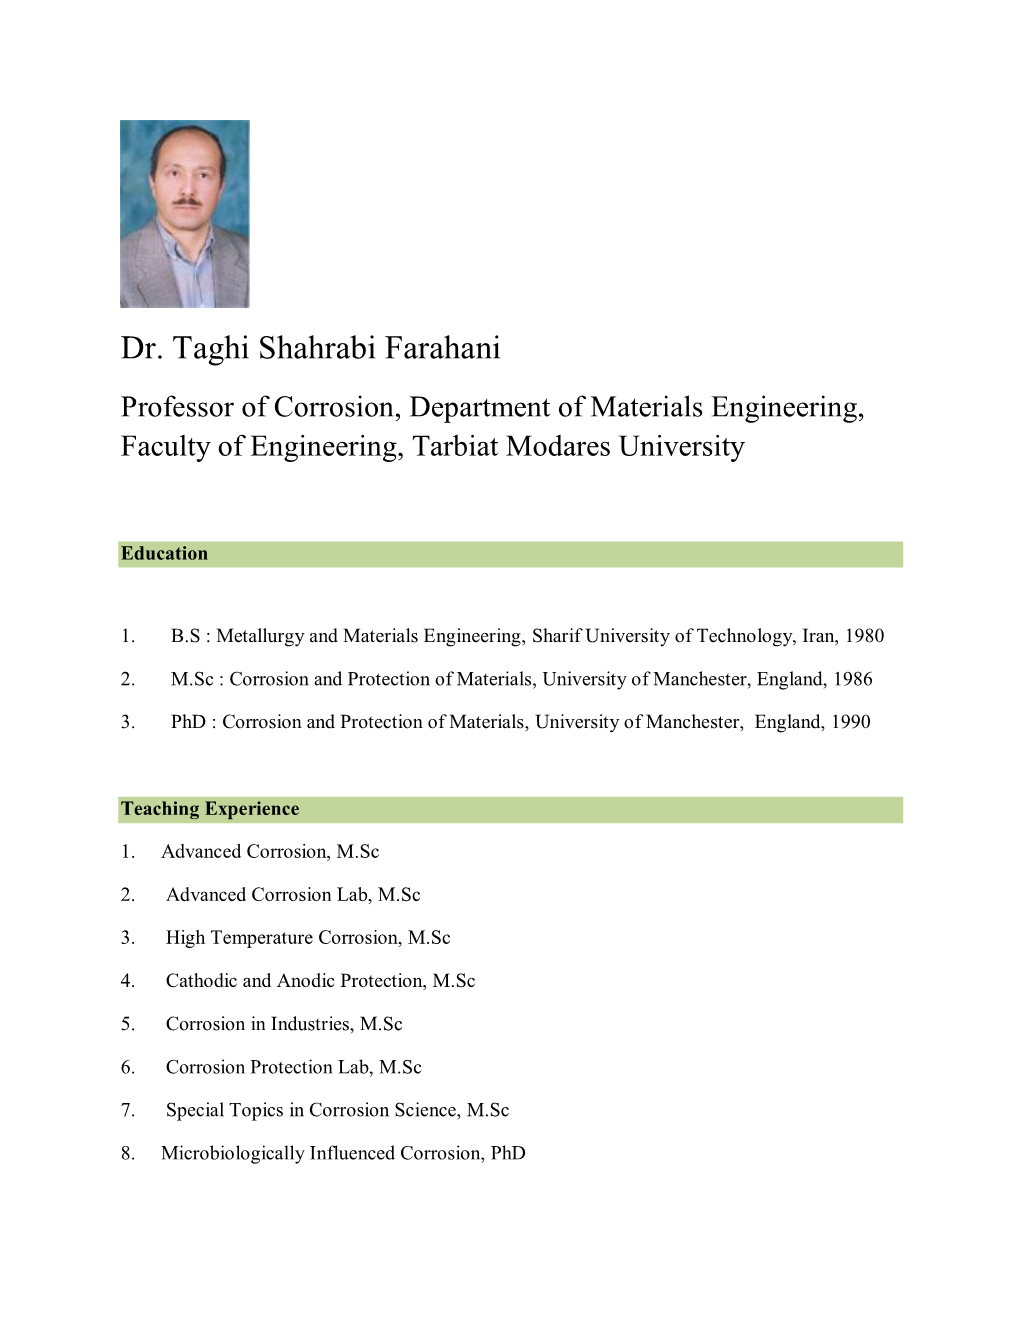 Dr. Taghi Shahrabi Farahani Professor of Corrosion, Department of Materials Engineering, Faculty of Engineering, Tarbiat Modares University